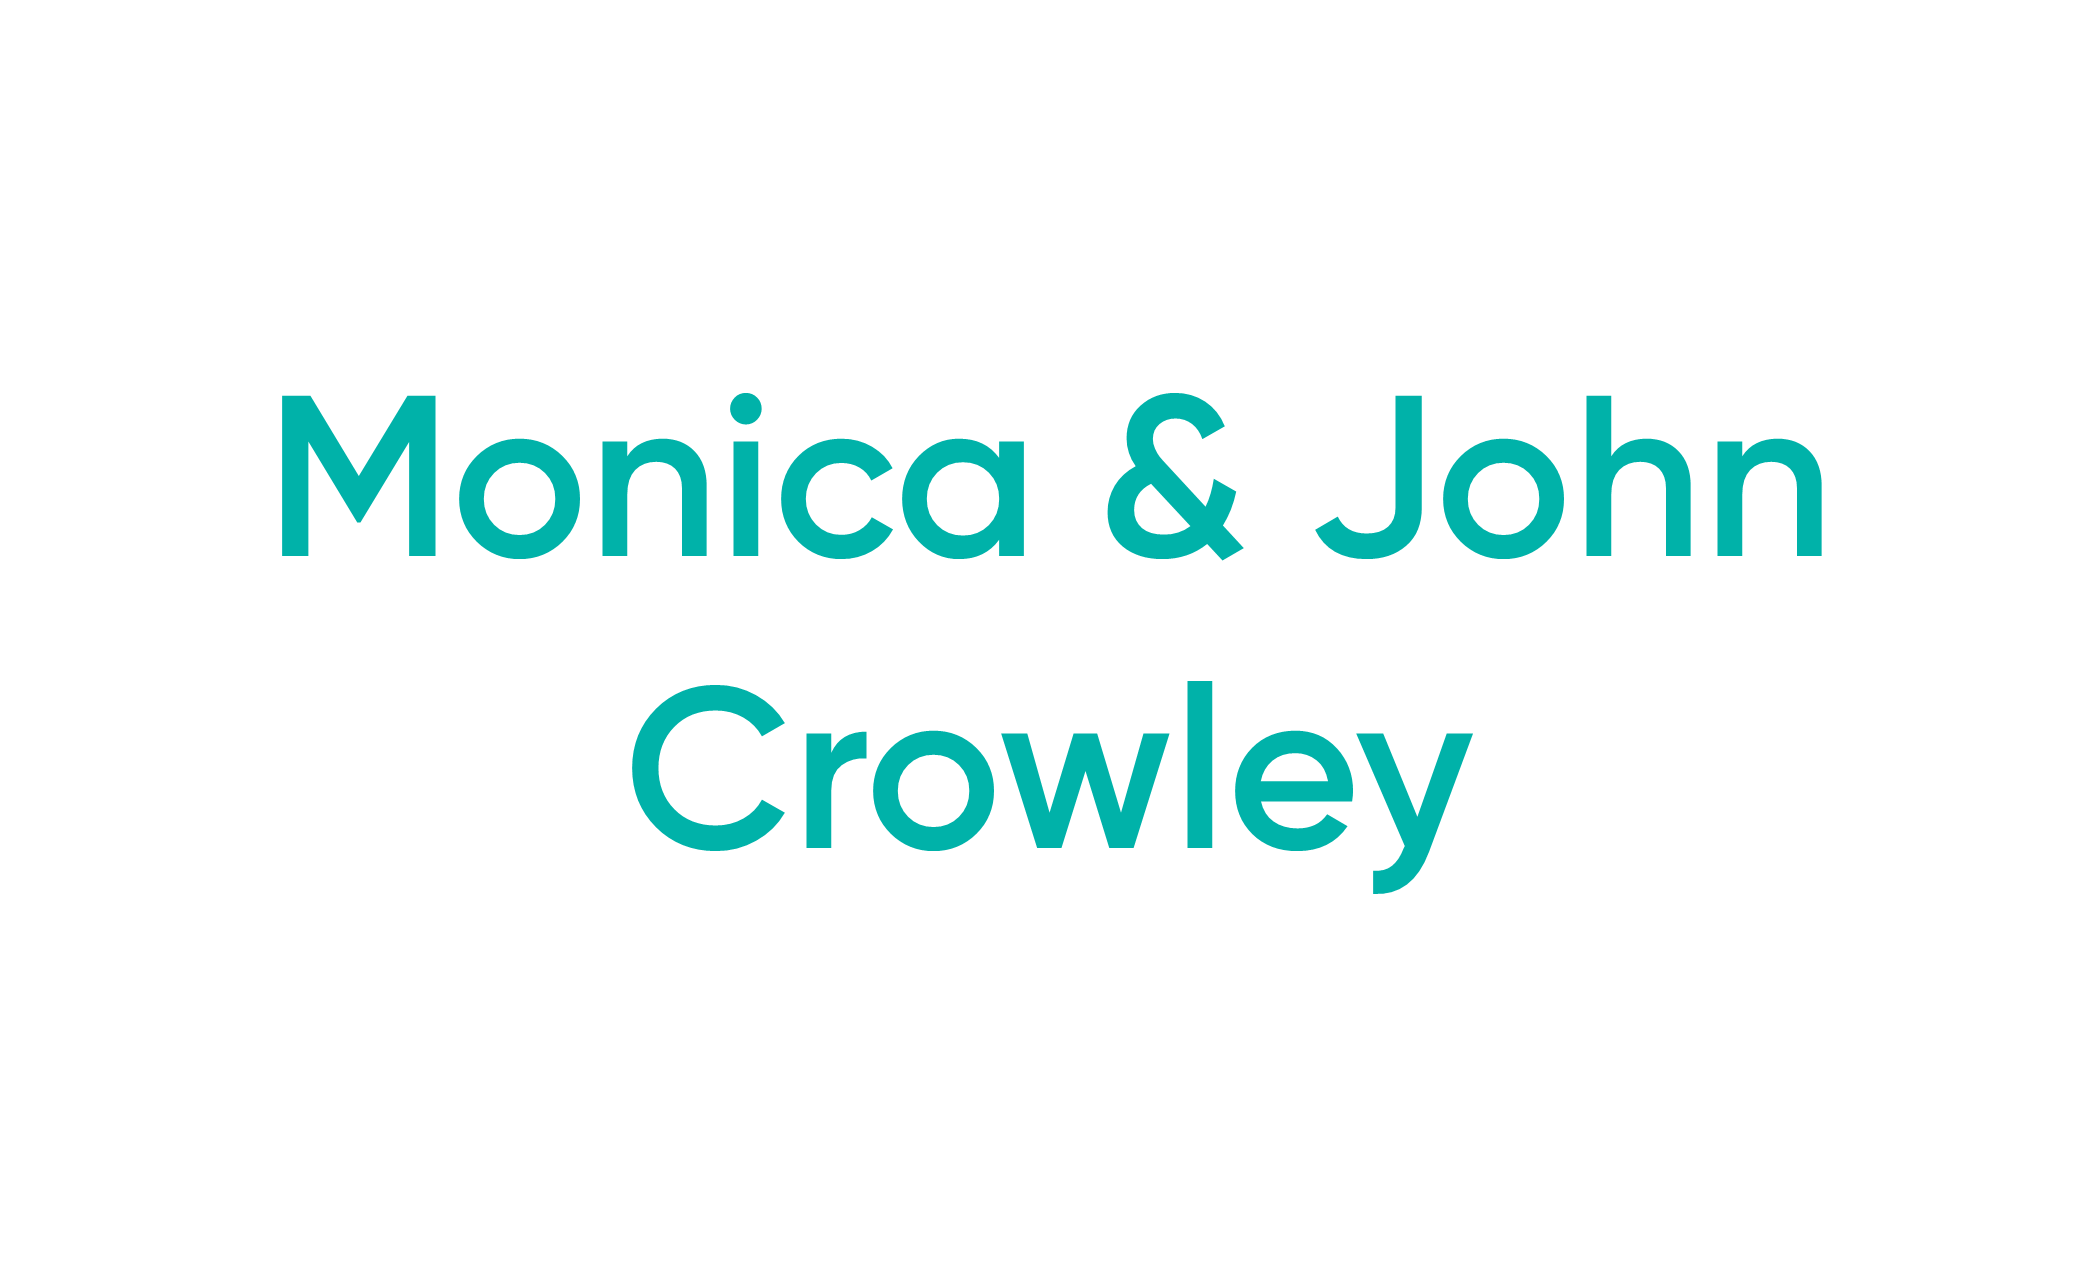 Monica & John Crowley